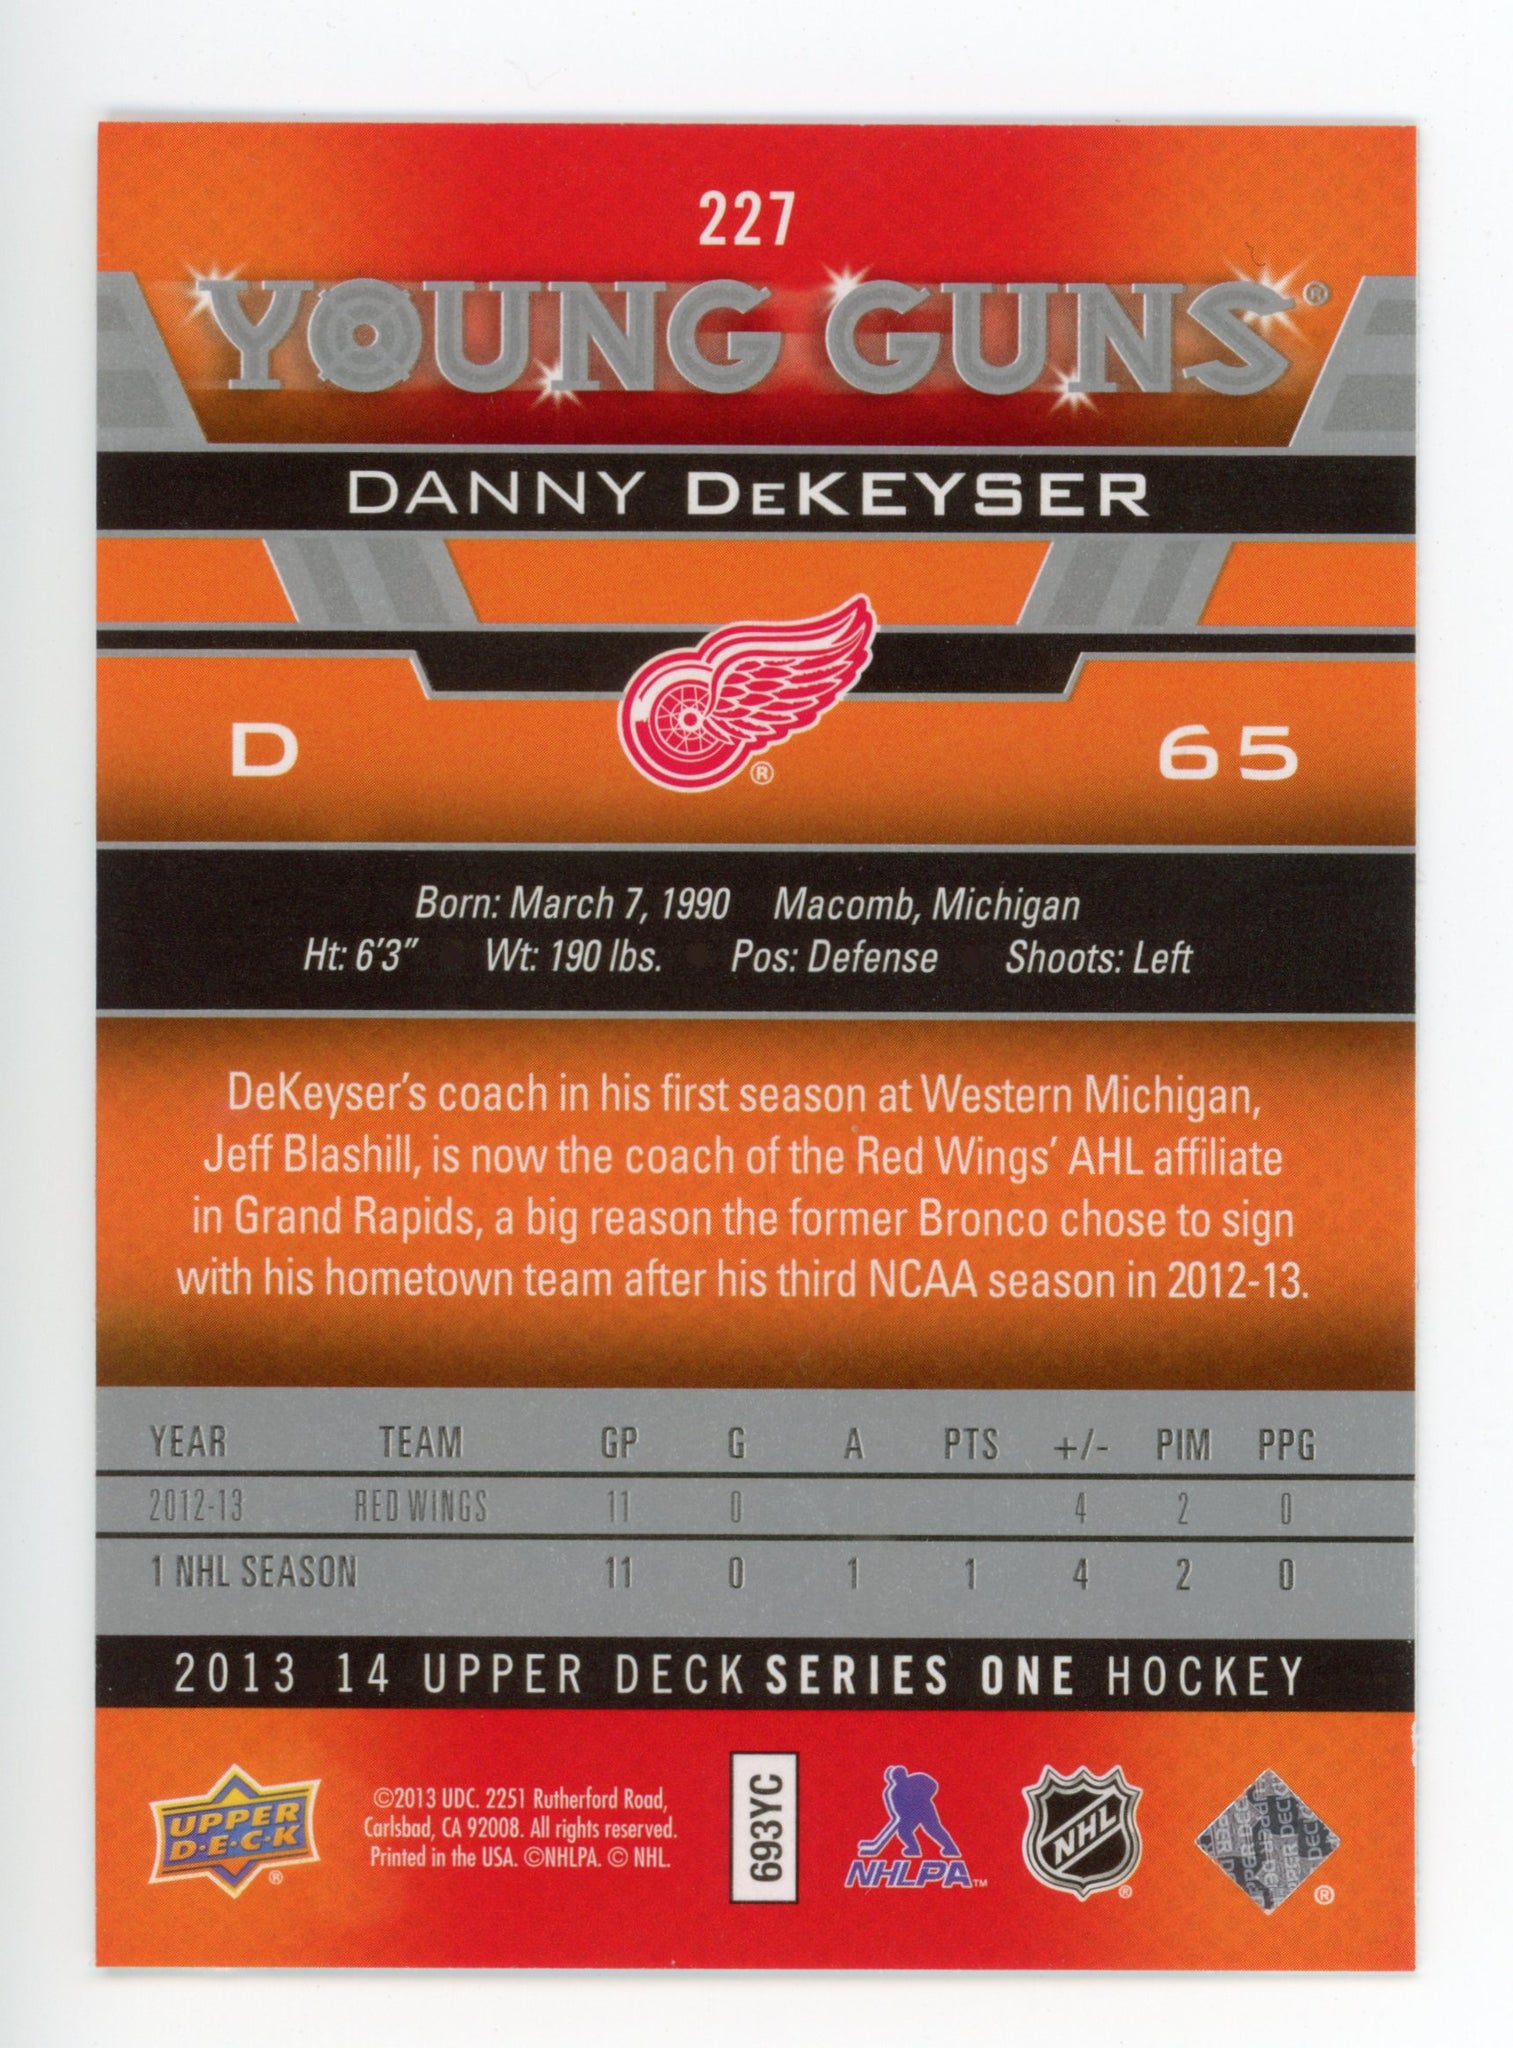 2013-2014 Danny Dekeyser Young Guns Upper Deck Series 1 Detroit Red Wings # 227